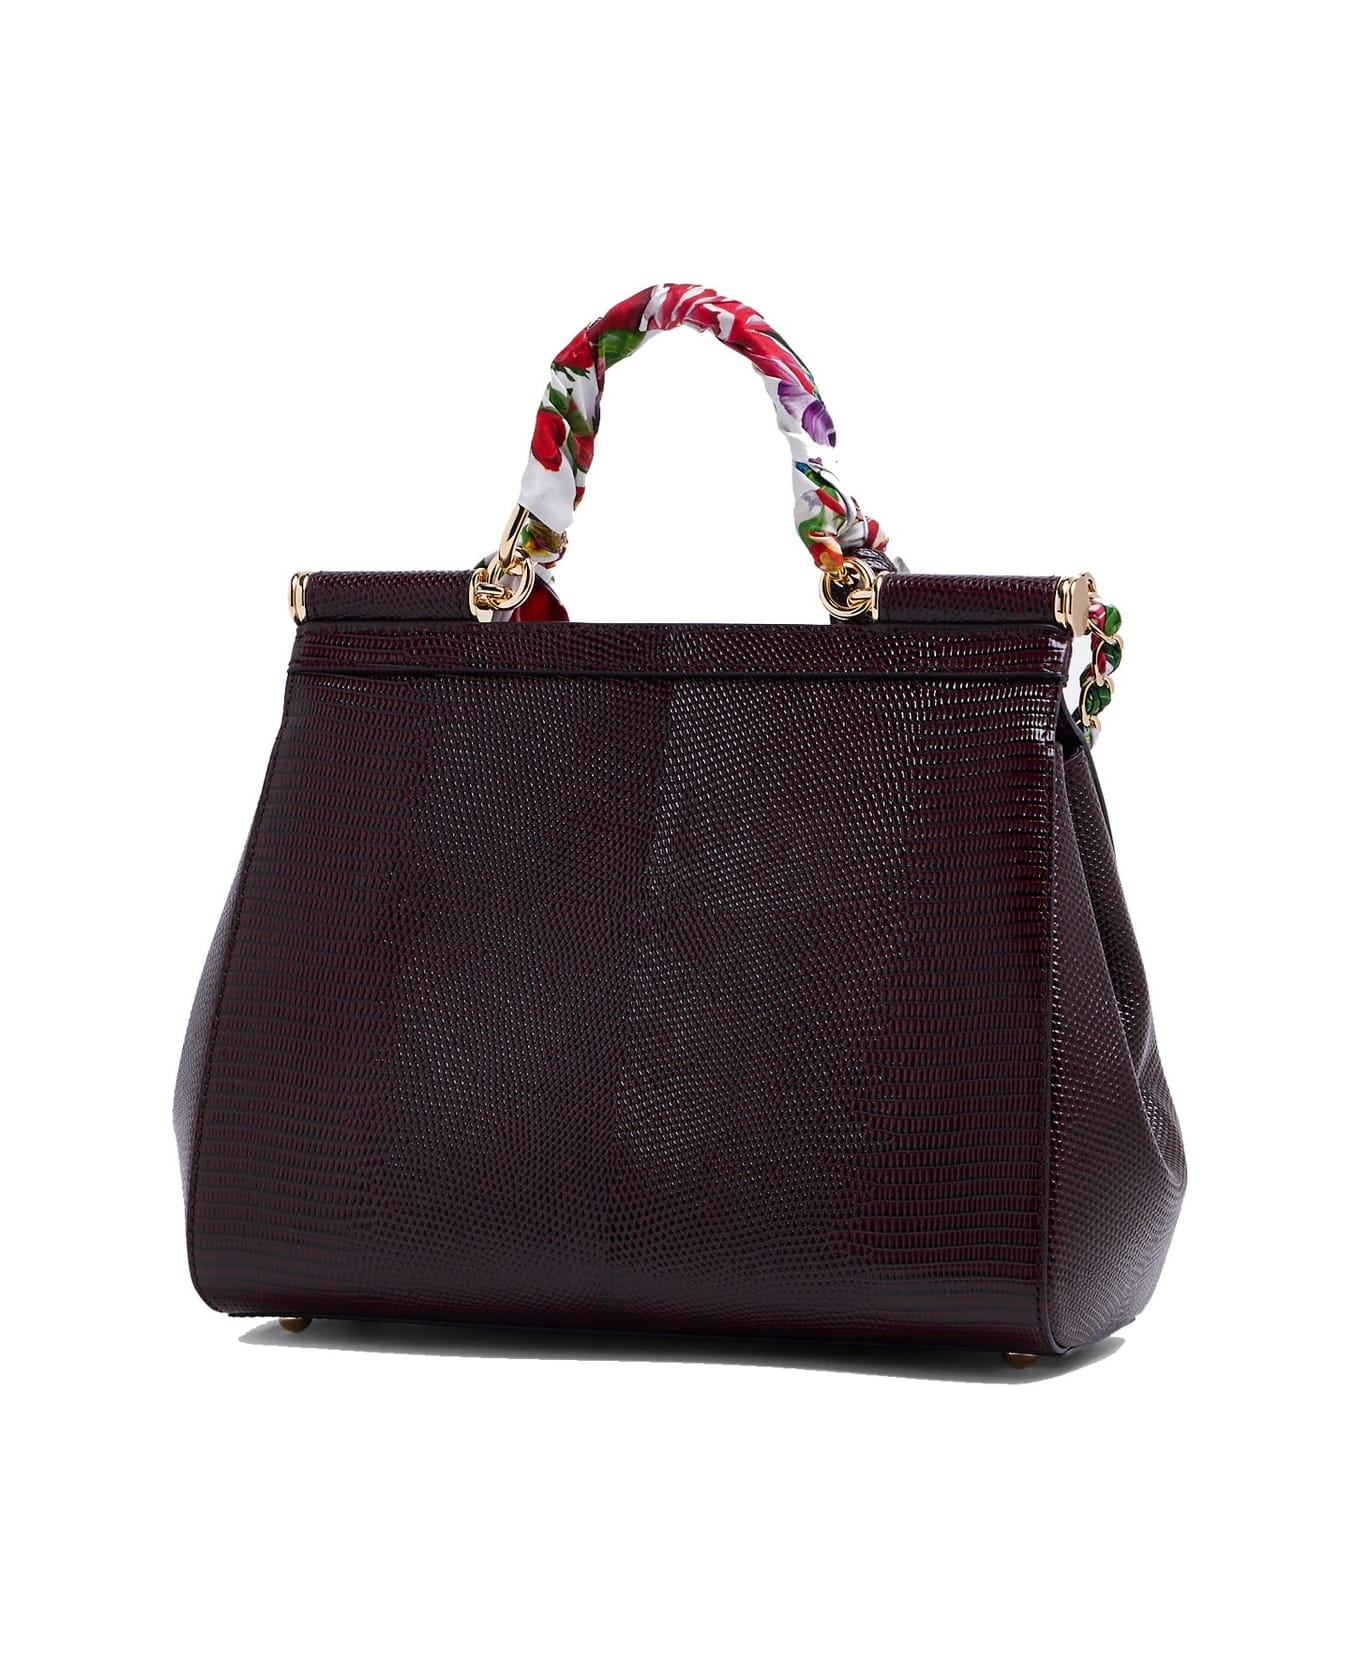 Dolce & Gabbana Sicily Dauphine Handbag - Red